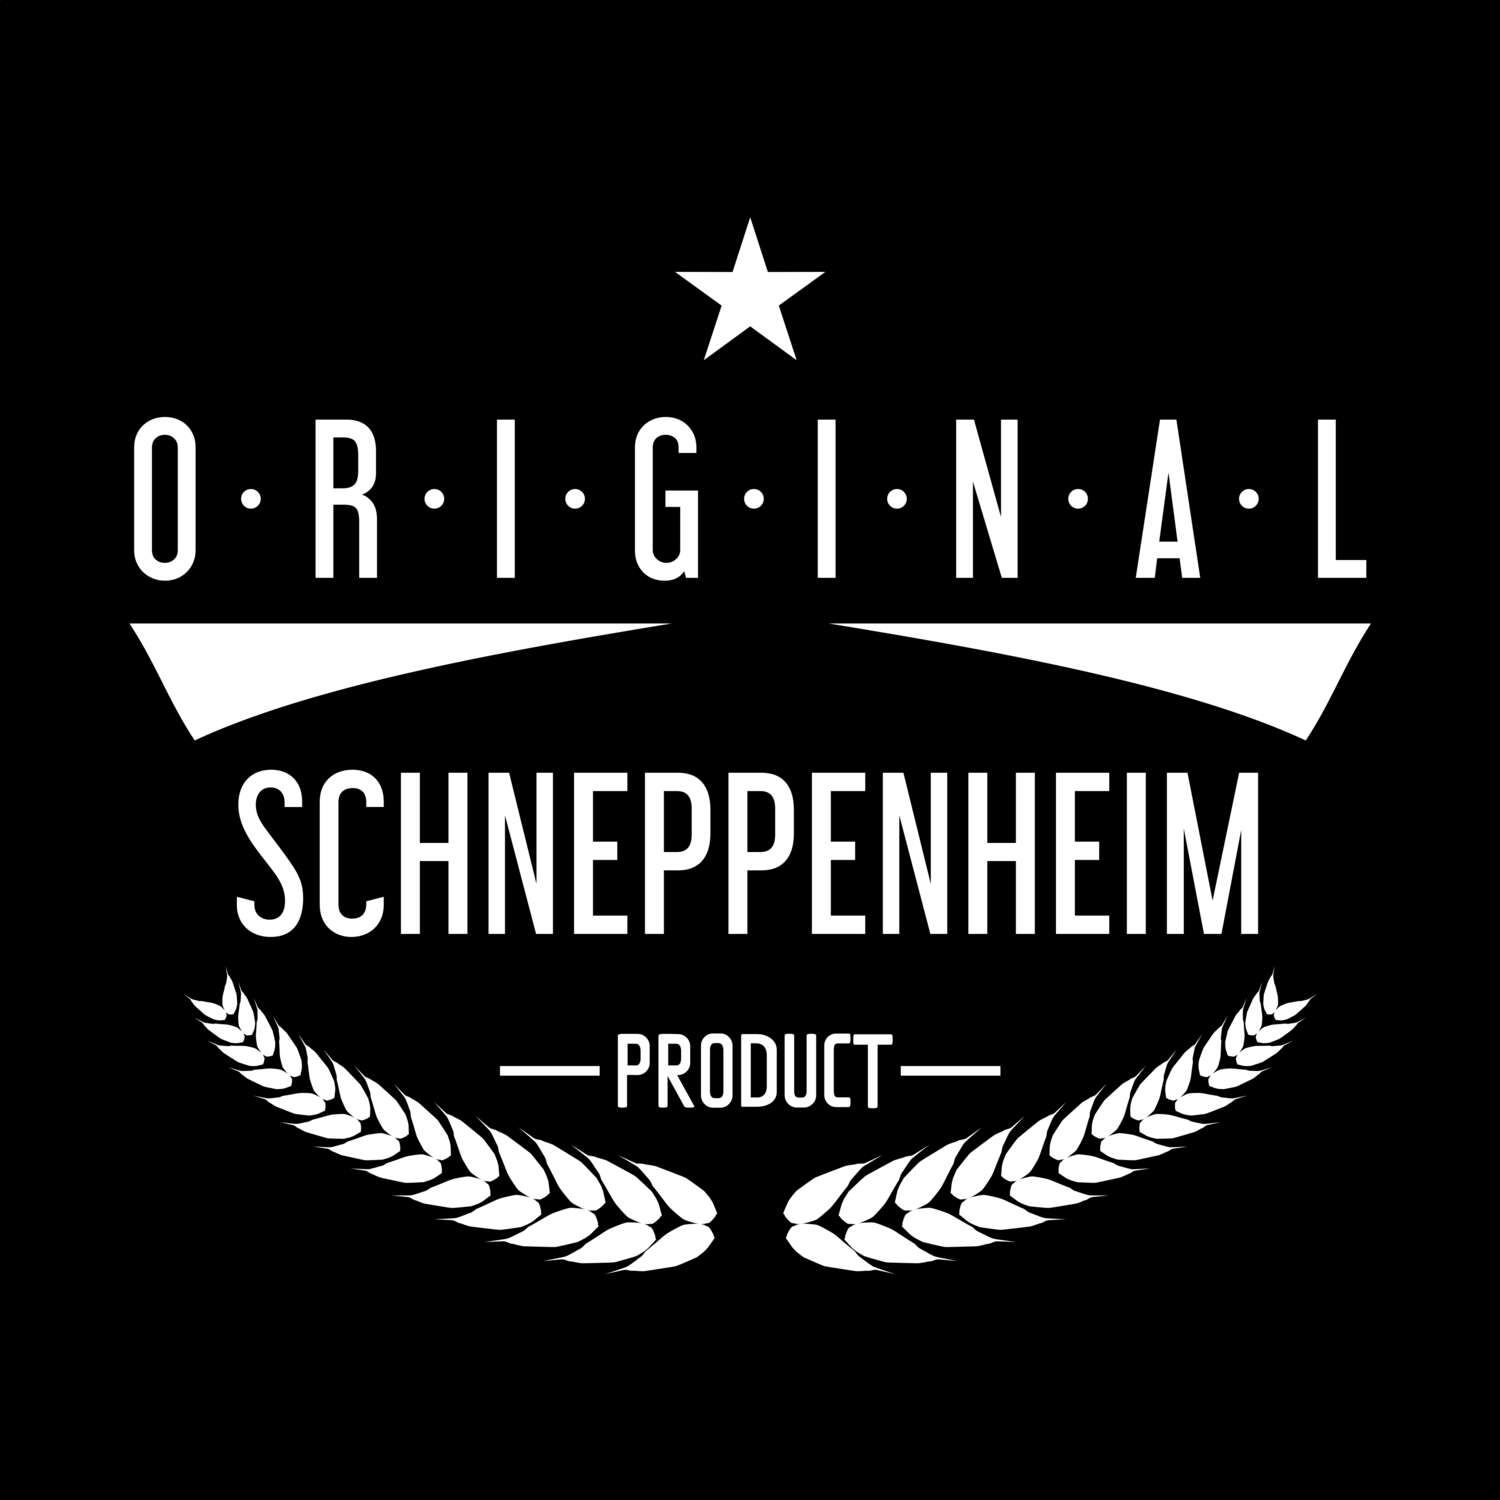 Schneppenheim T-Shirt »Original Product«